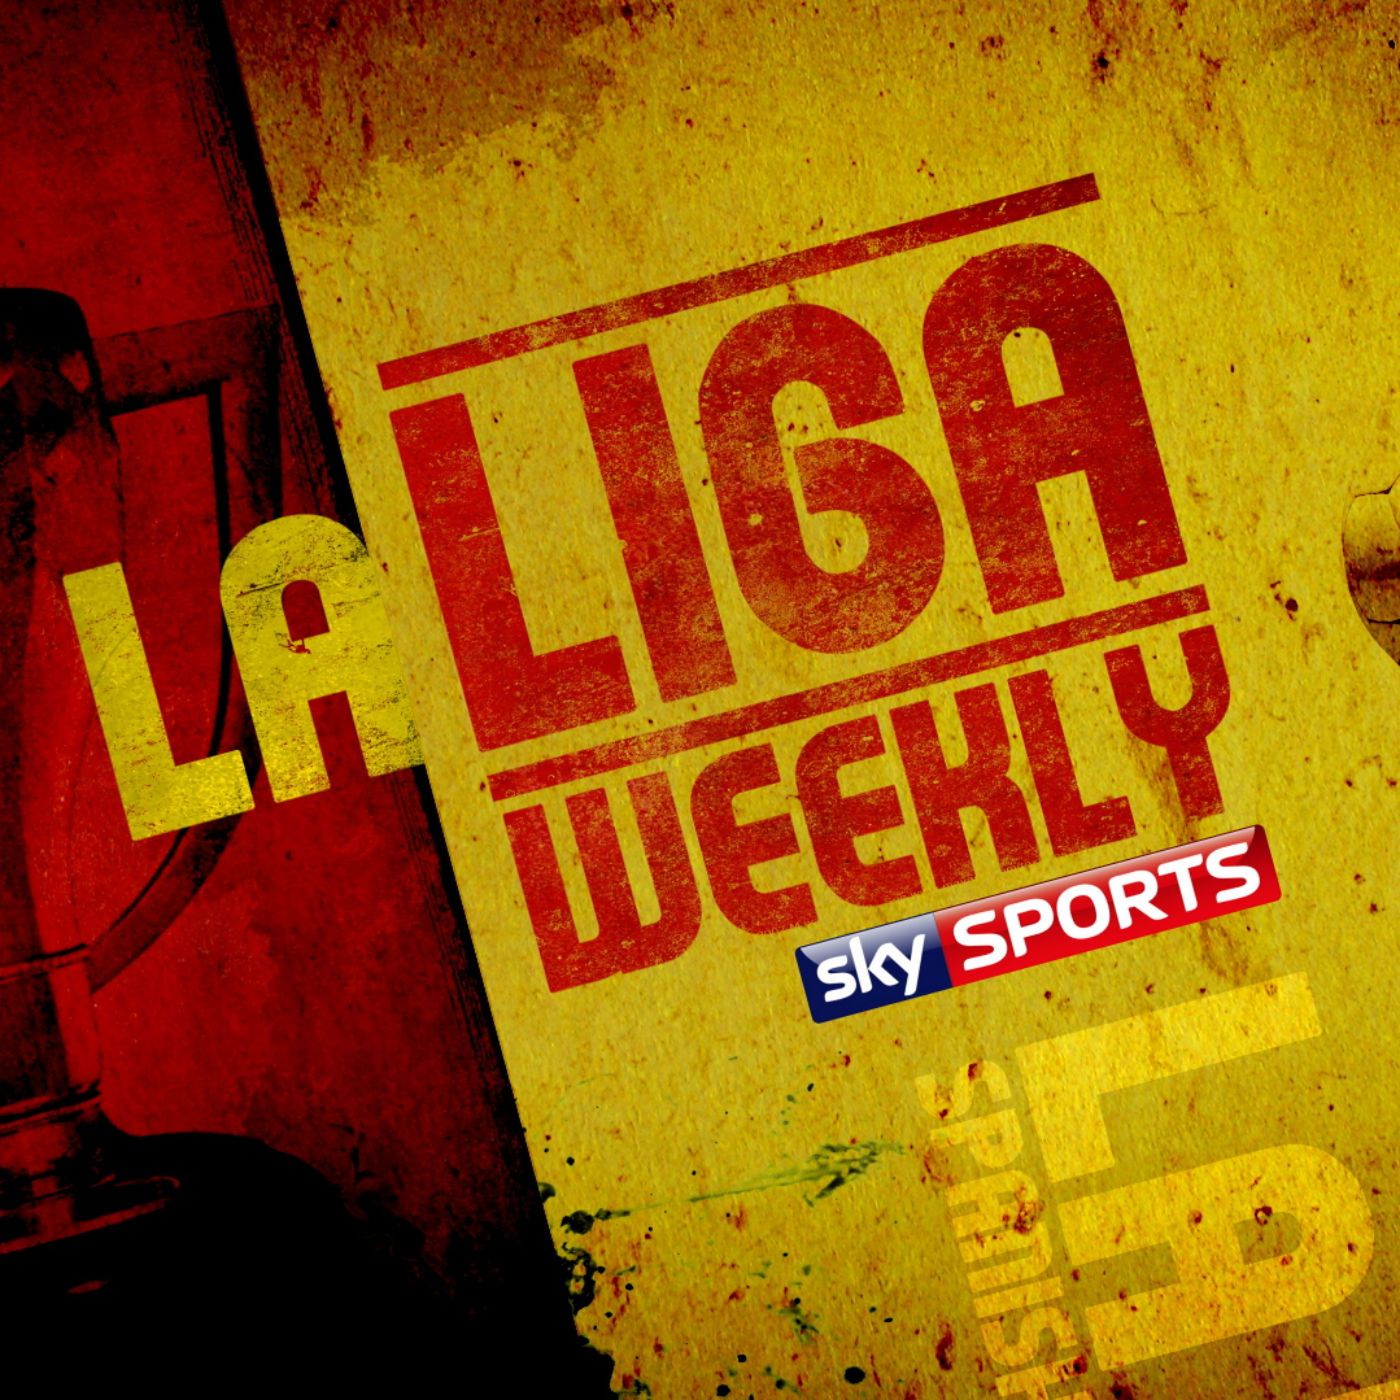 La Liga Weekly - 23rd January